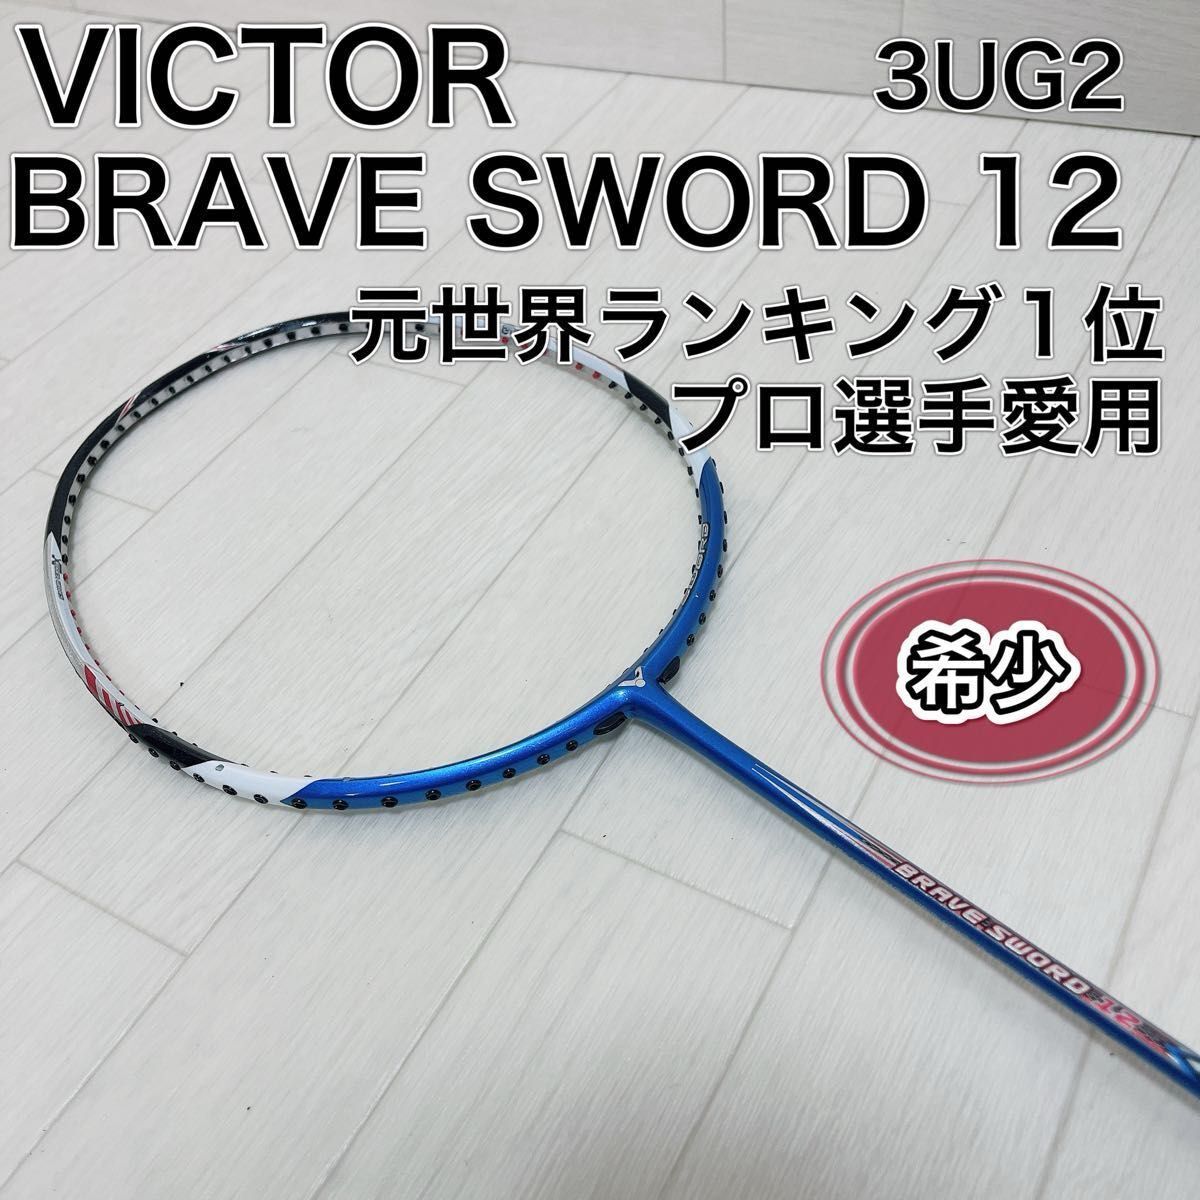 VICTOR BRAVE SWORD 12 バトミントンラケット 3UG2 希少_画像1